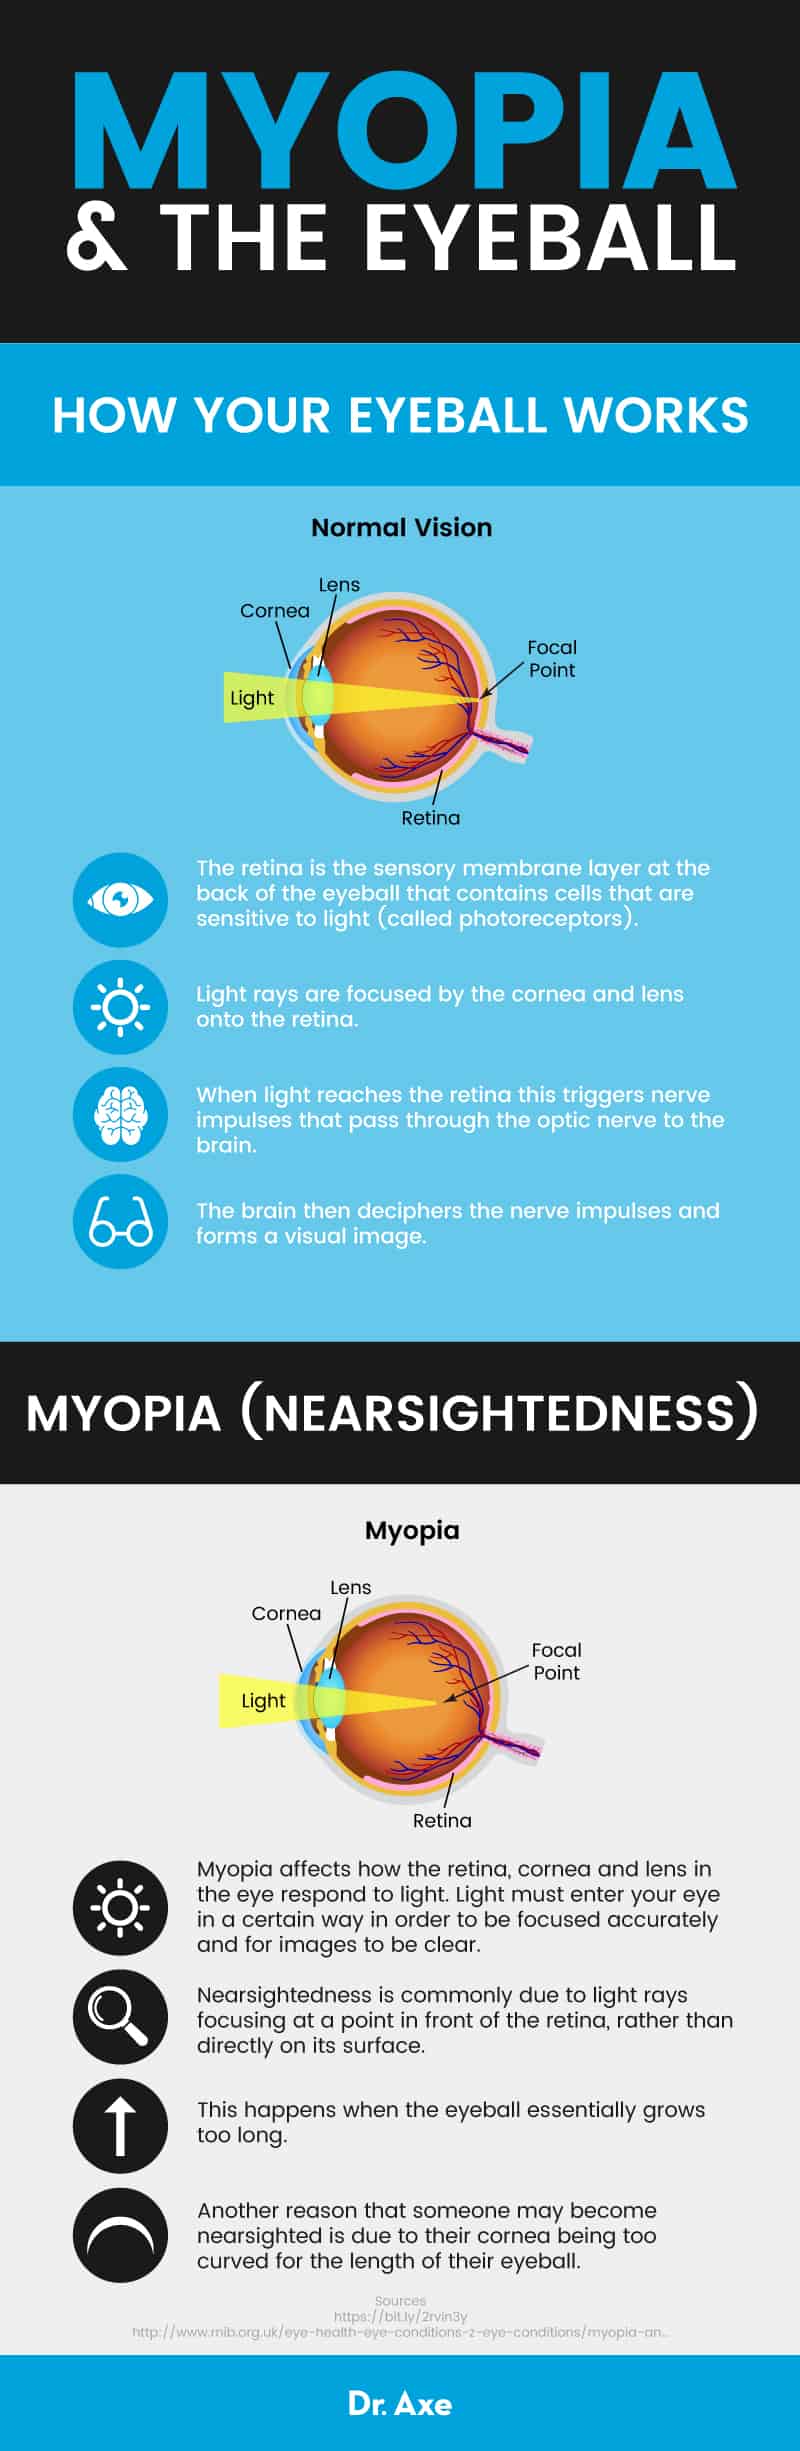 Myopia & the eyeball - Dr. Axe